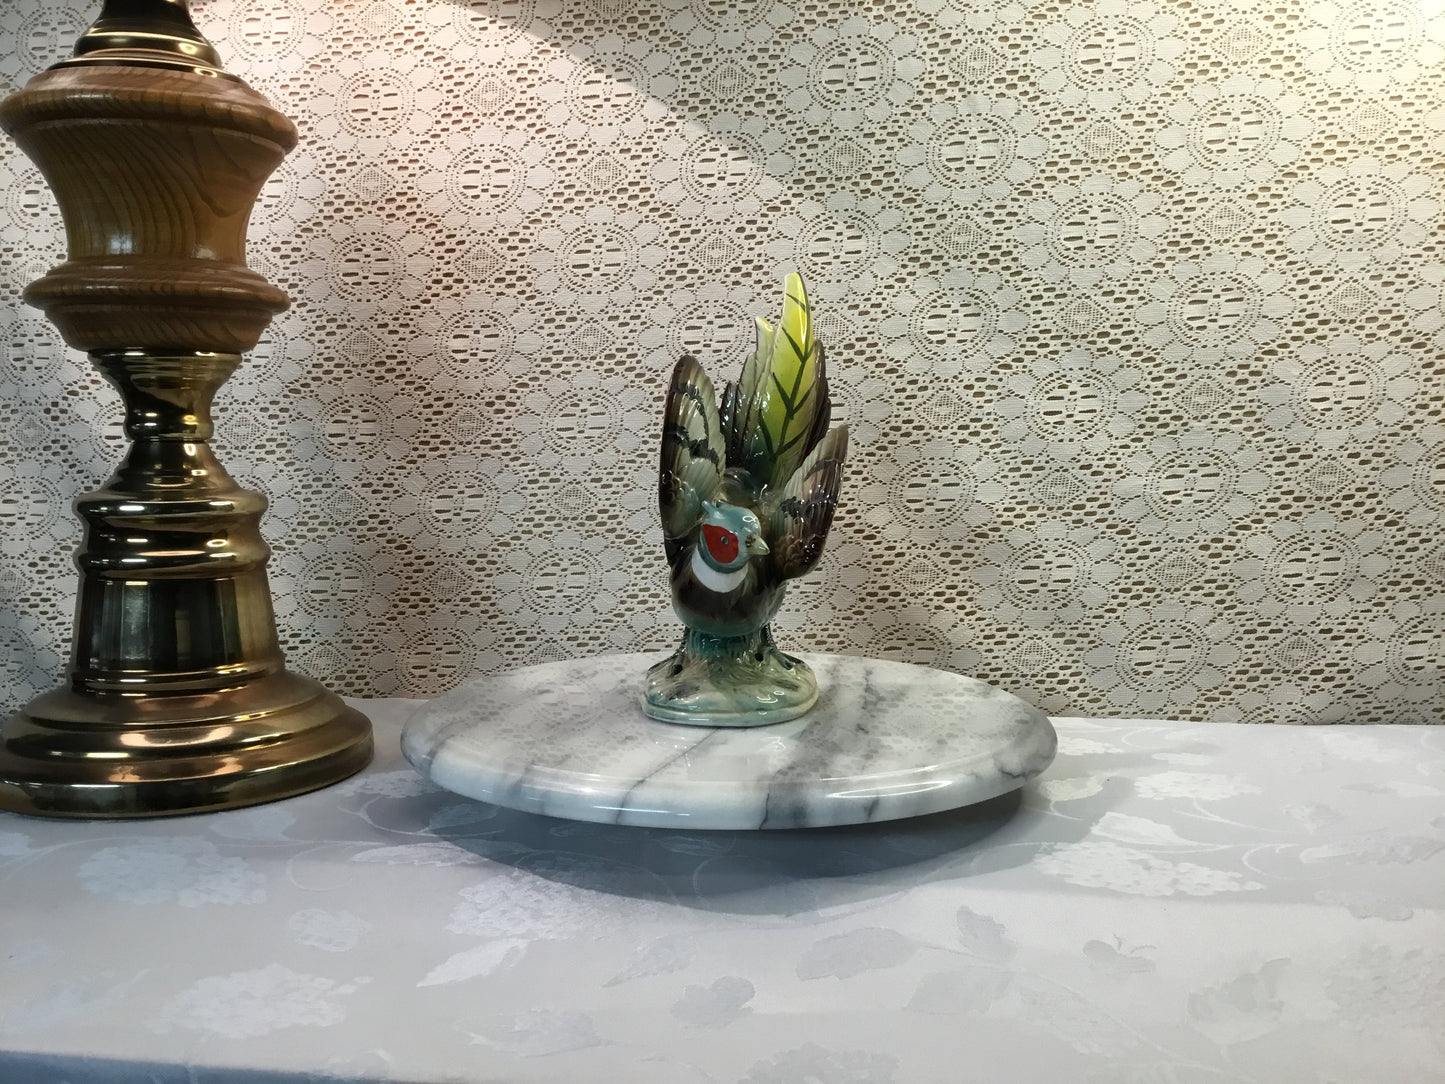 Pheasant Figurine